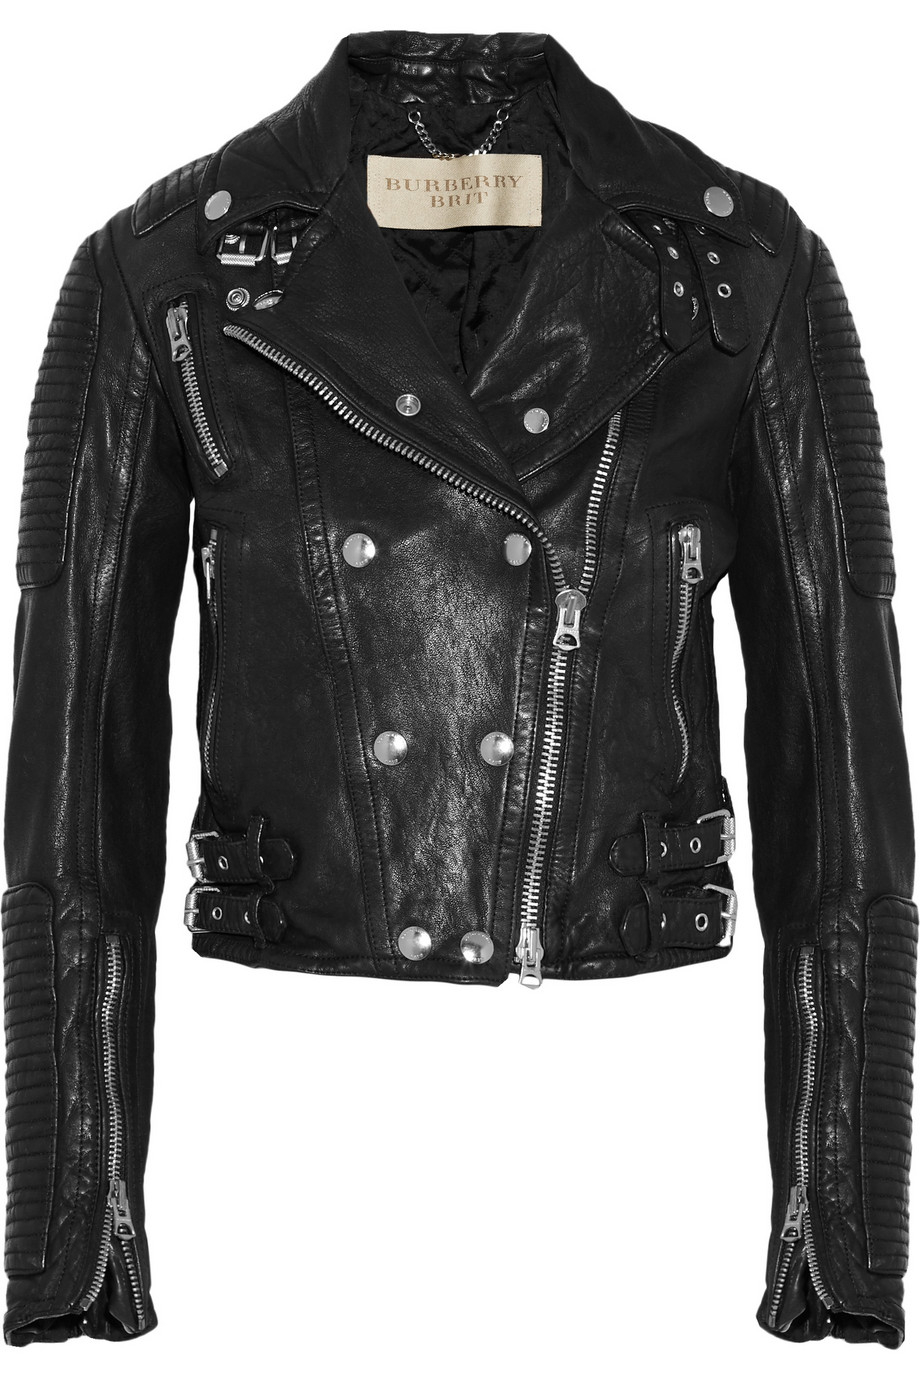 Lyst - Burberry Brit Cropped Leather Biker Jacket in Black